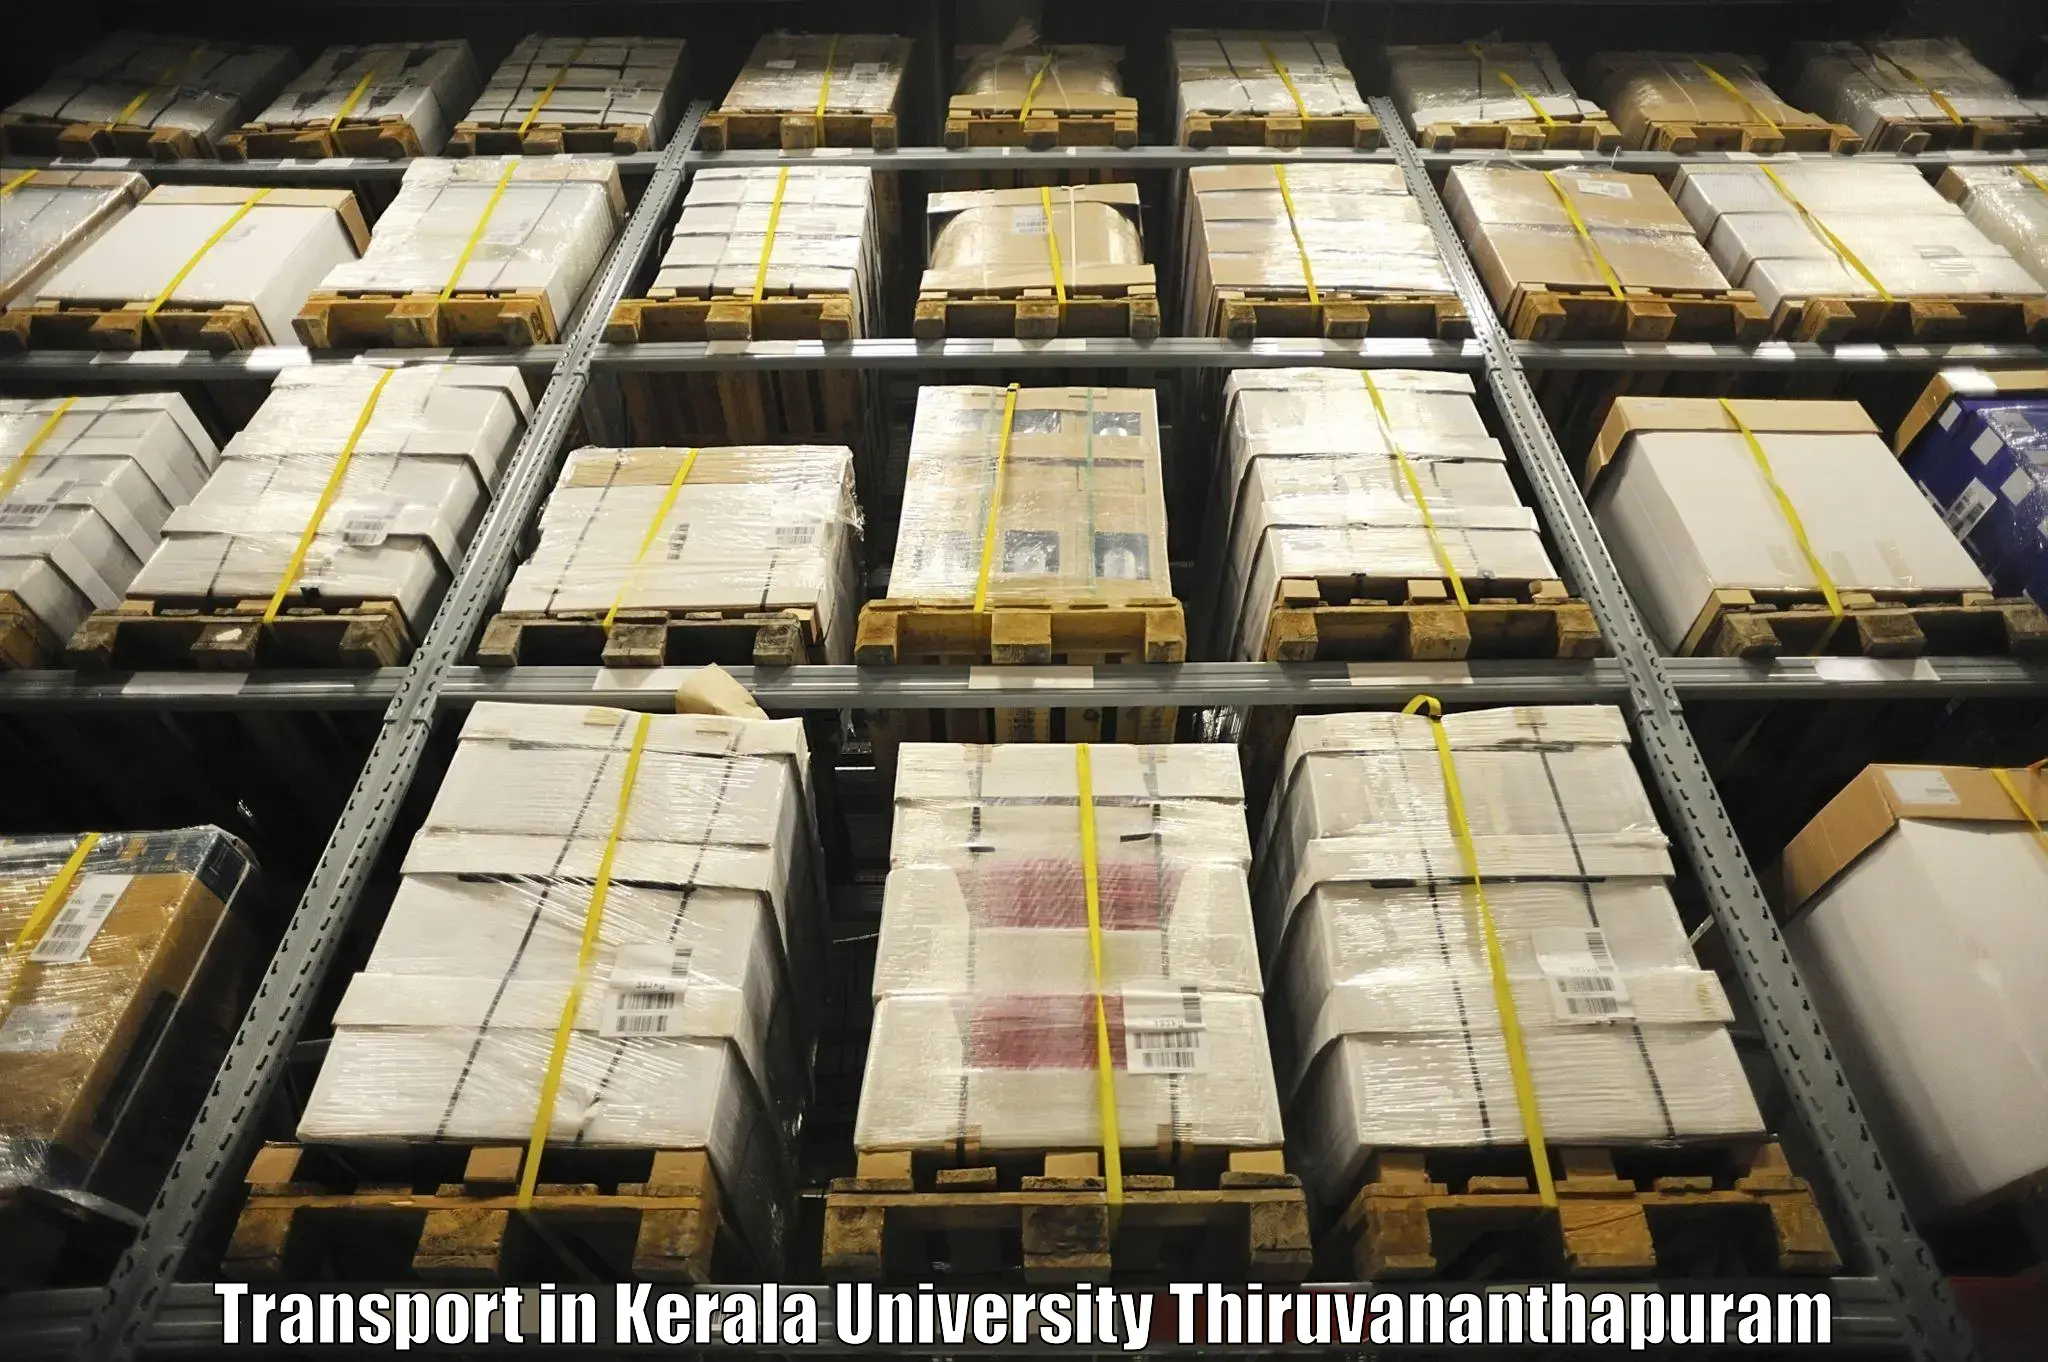 Interstate goods transport in Kerala University Thiruvananthapuram